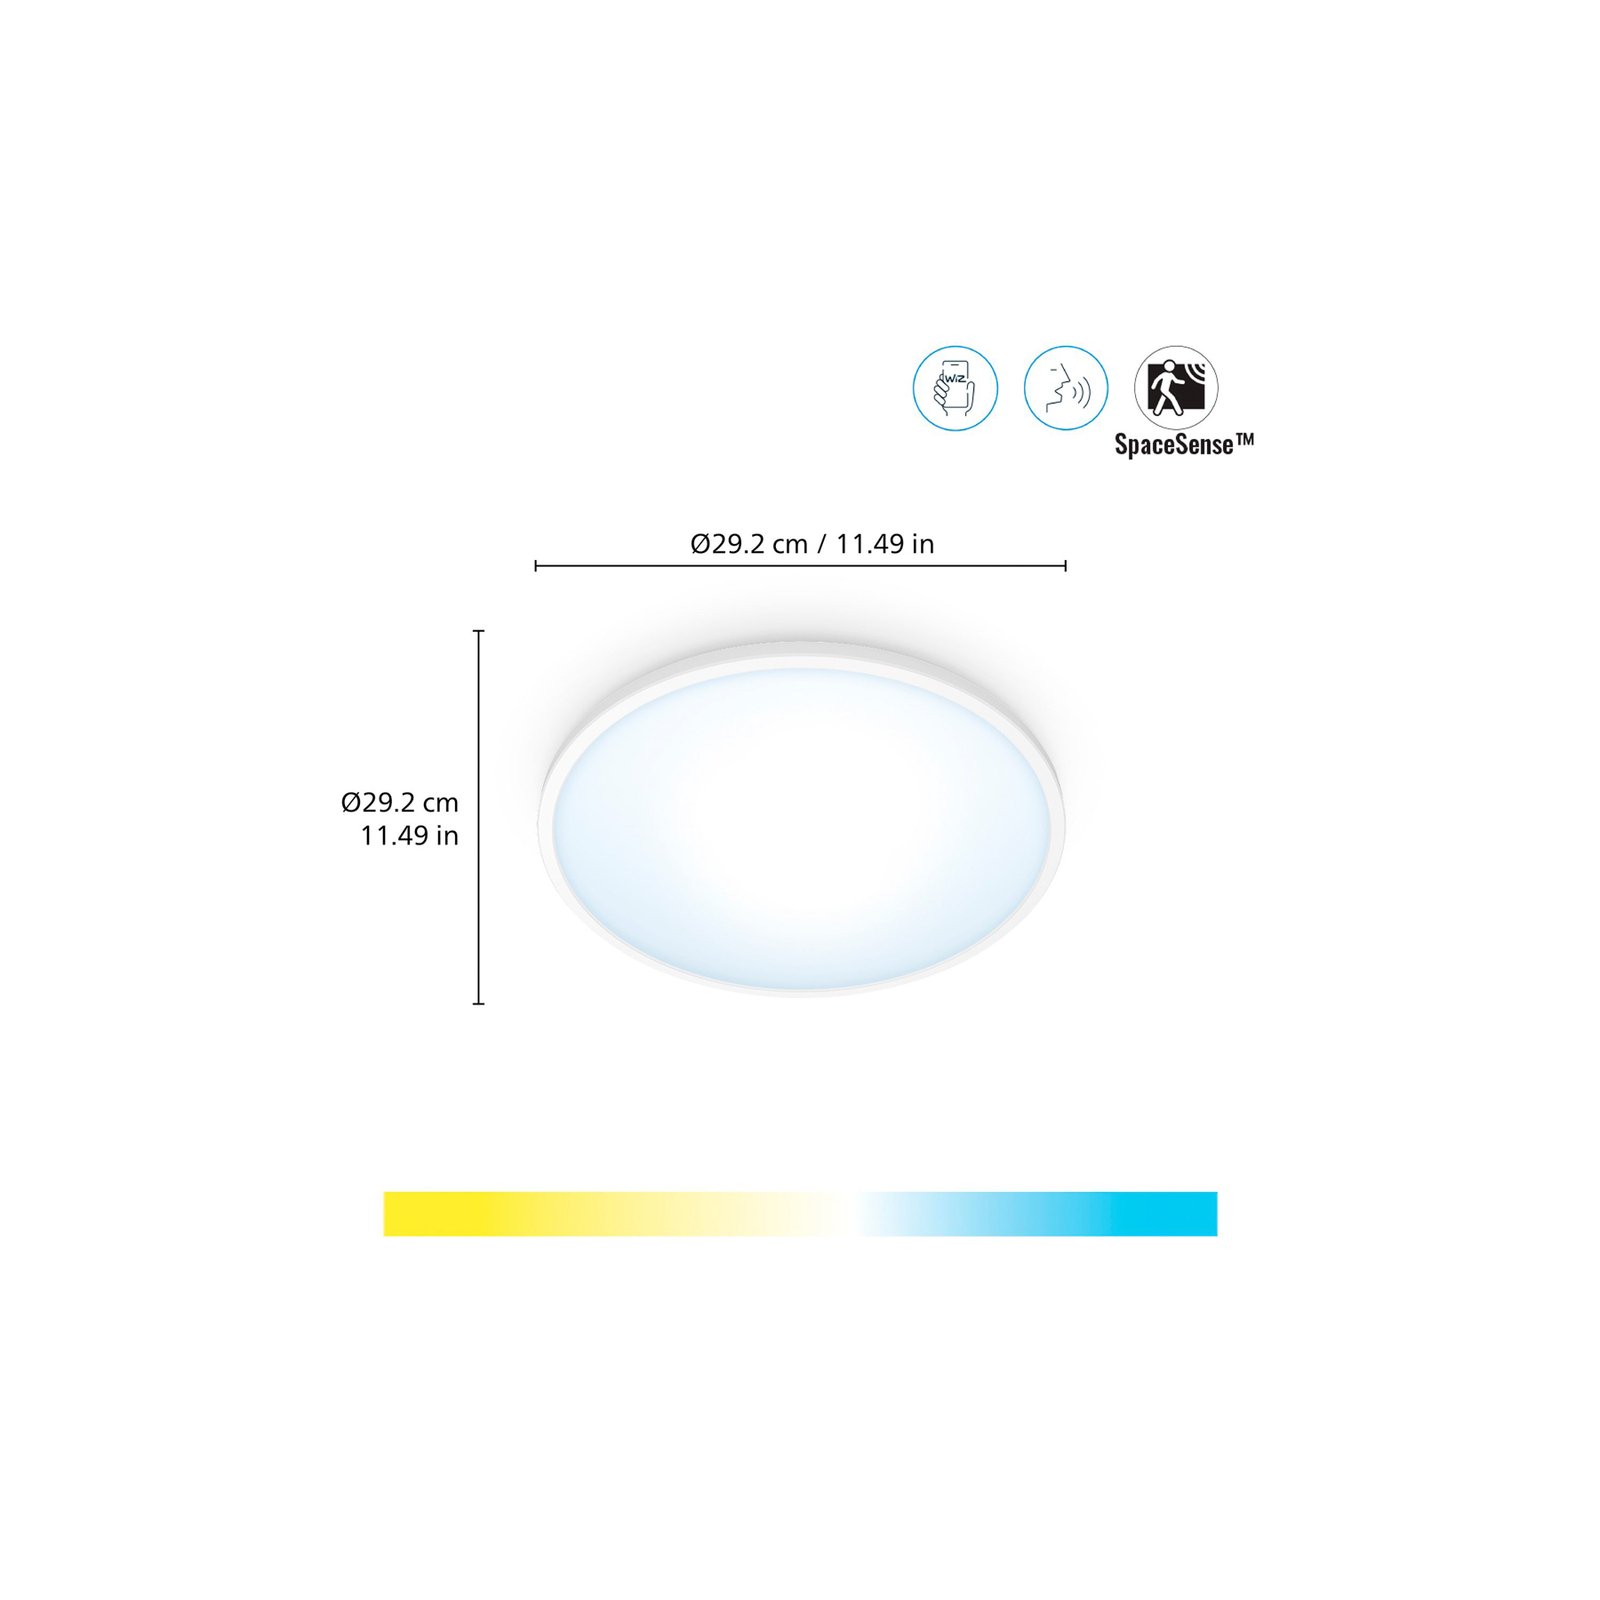 WiZ SuperSlim lampa sufitowa LED CCT Ø29cm biała